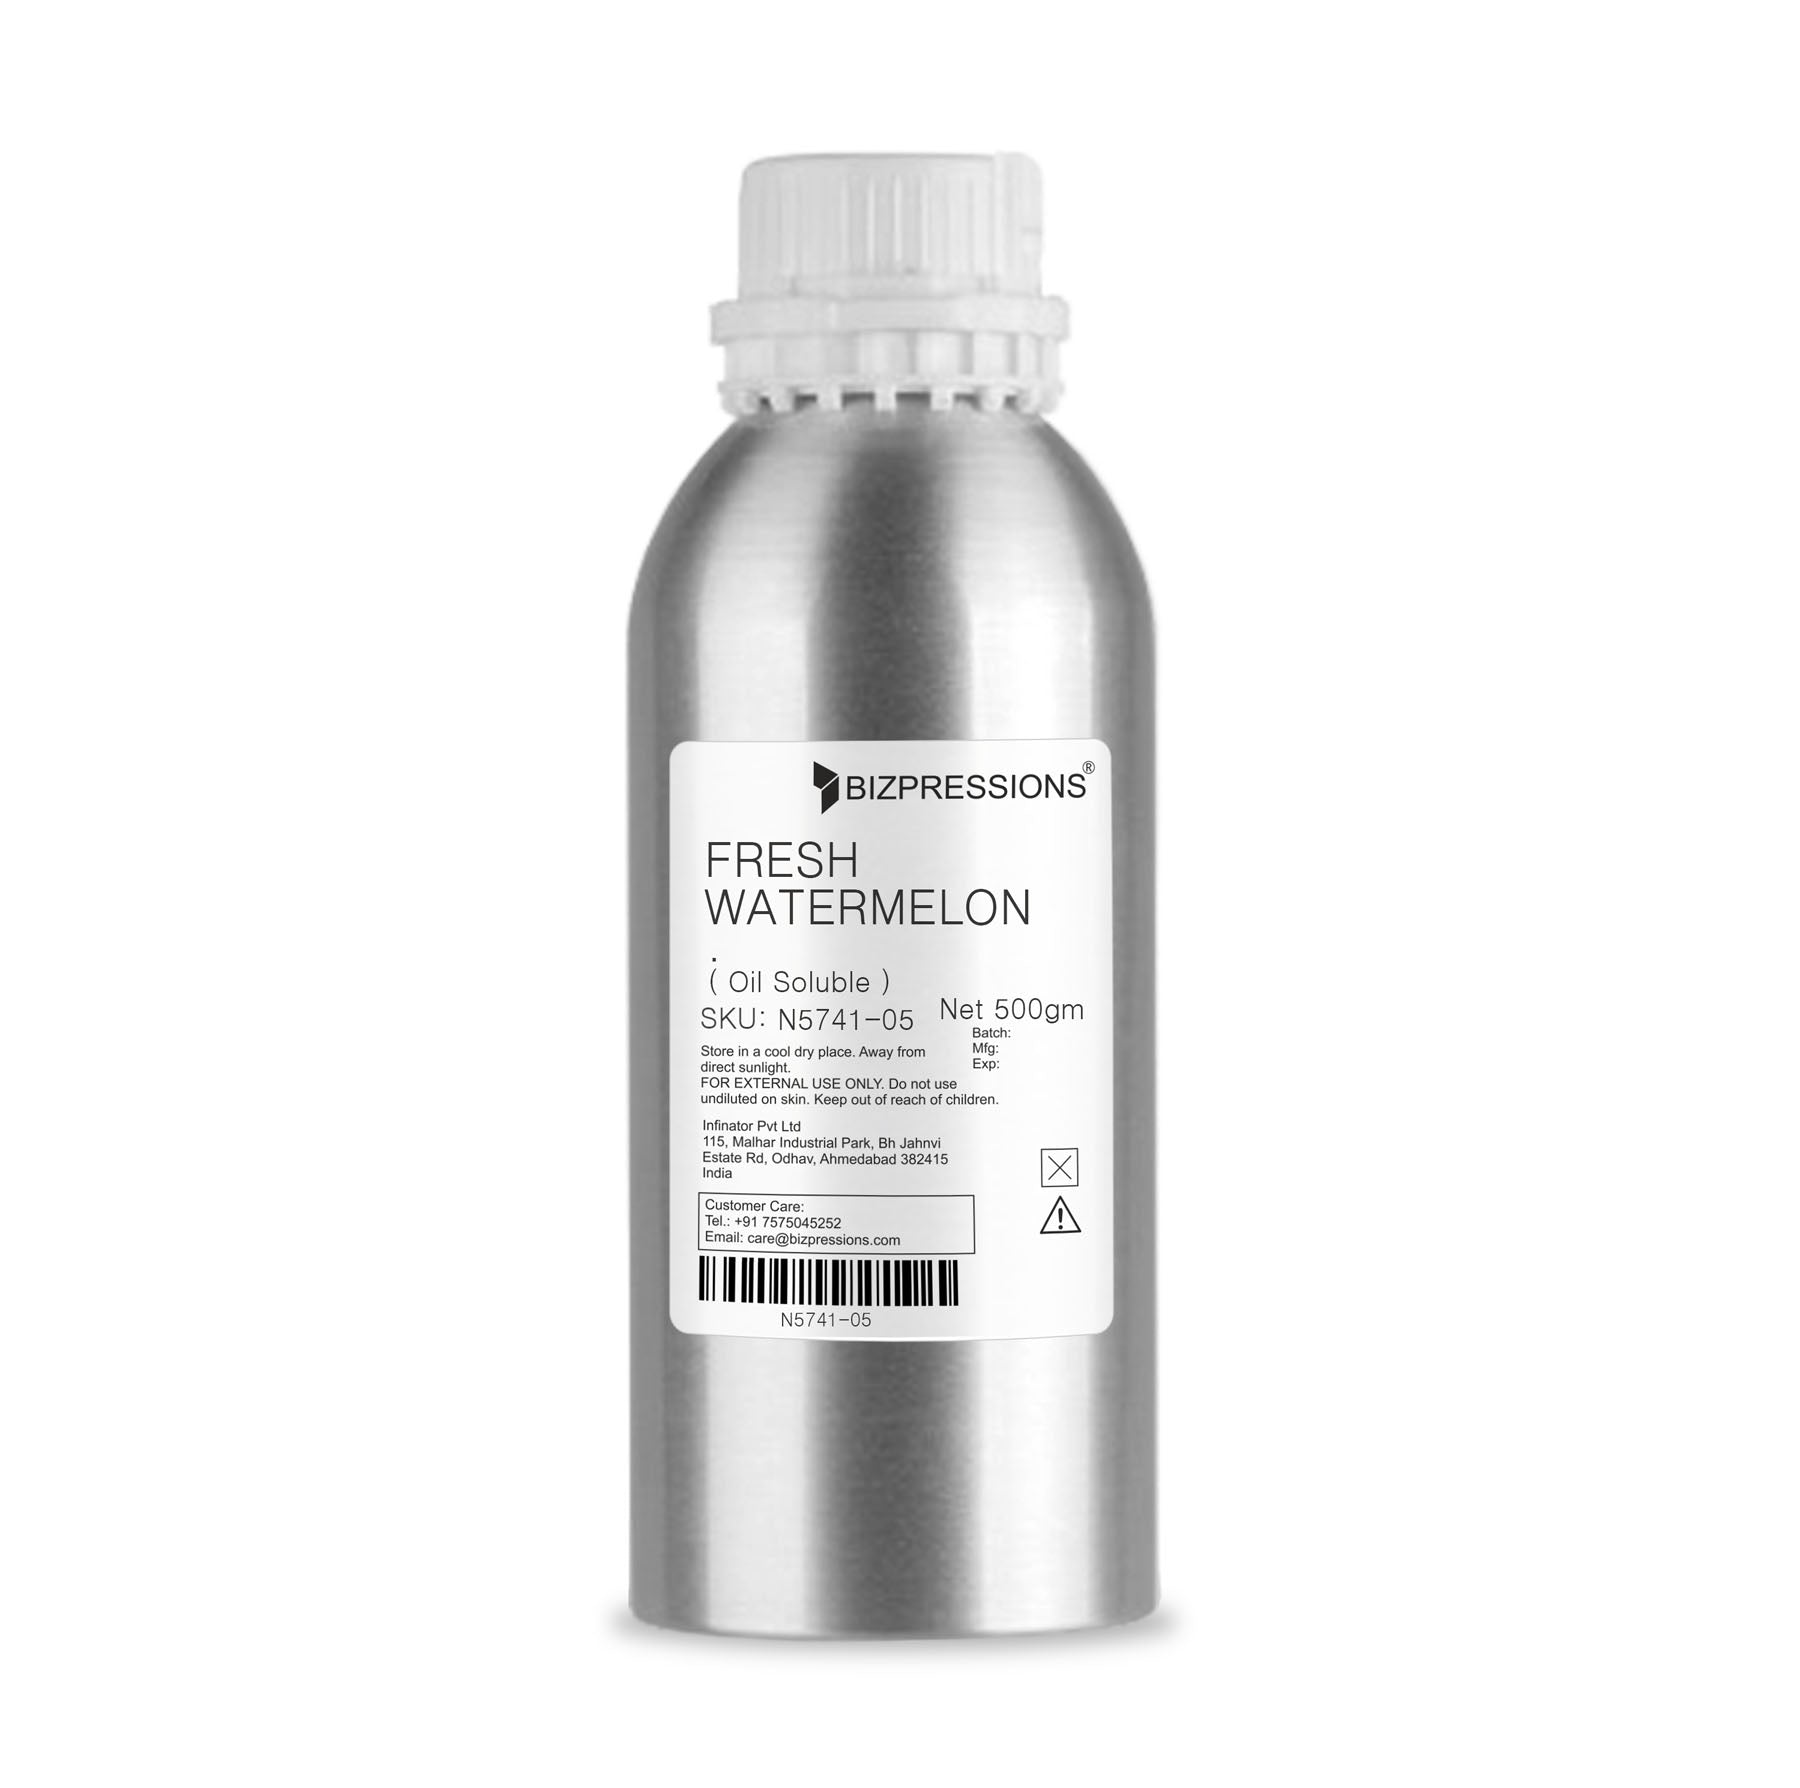 FRESH WATERMELON - Fragrance ( Oil Soluble ) - 500 gm